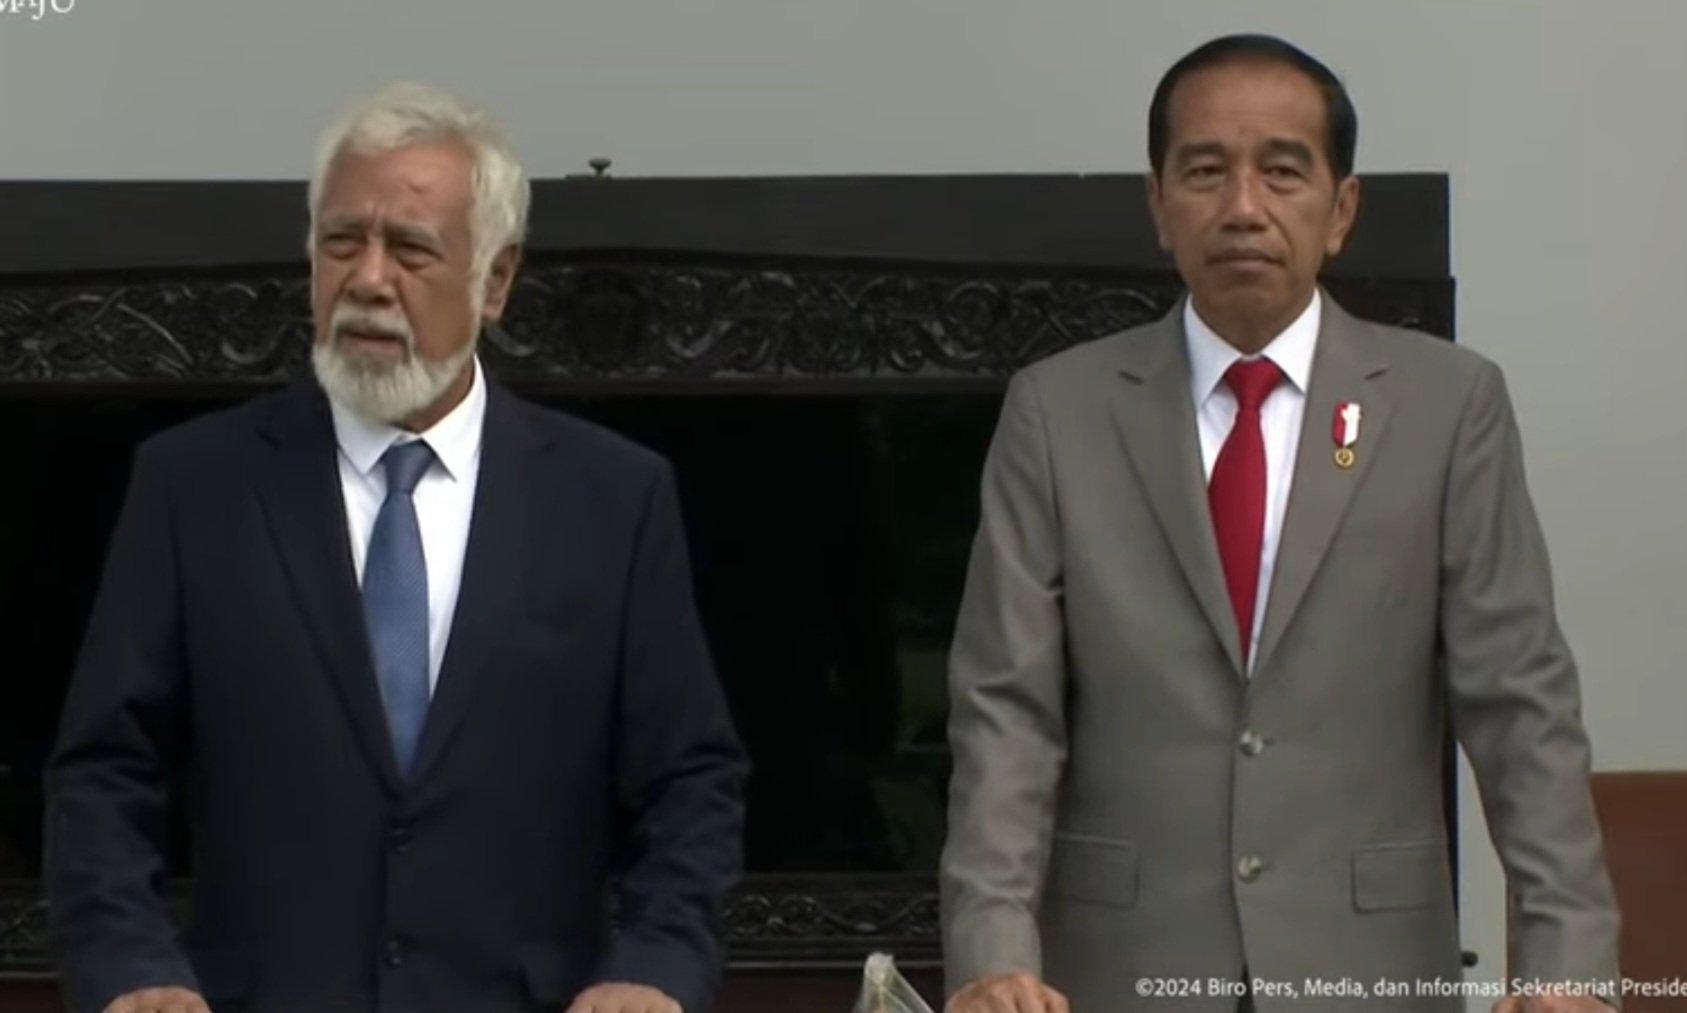 Pertemuan Presiden Joko Widodo dan PM Timor Leste, Xanan Gusmao di Istana Negara (Sinpo.id/Biro Setpres)